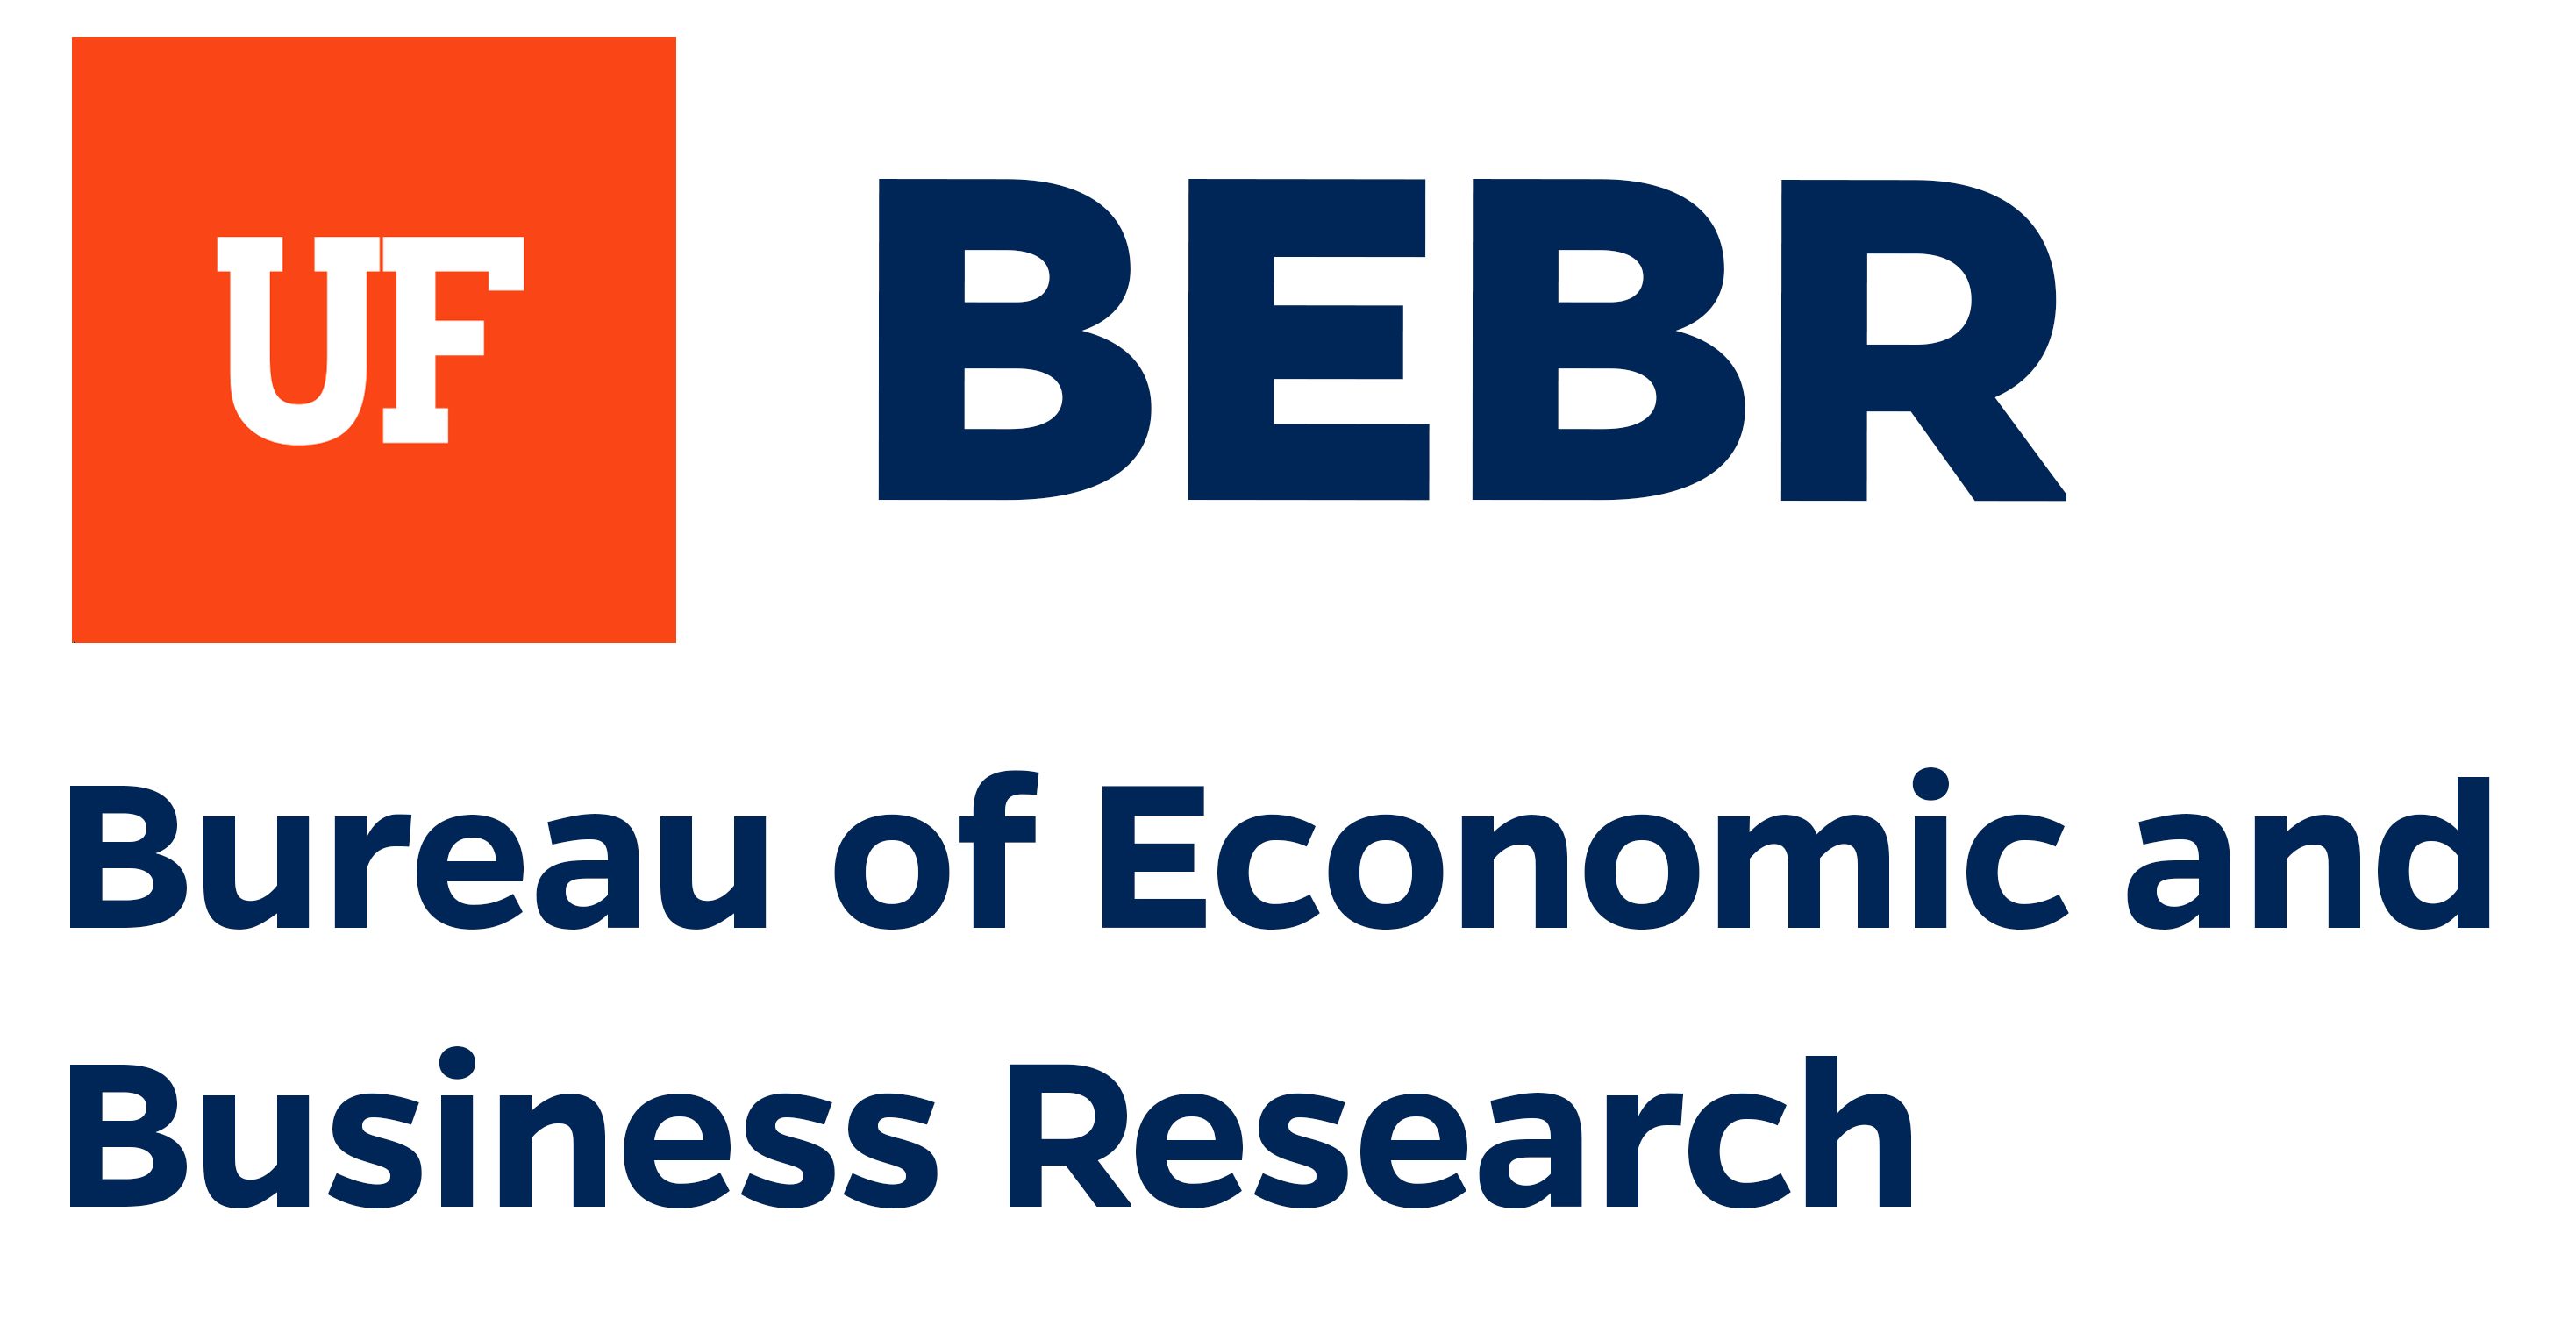 B.E.B.R. - Bureau of Economic and Business Research